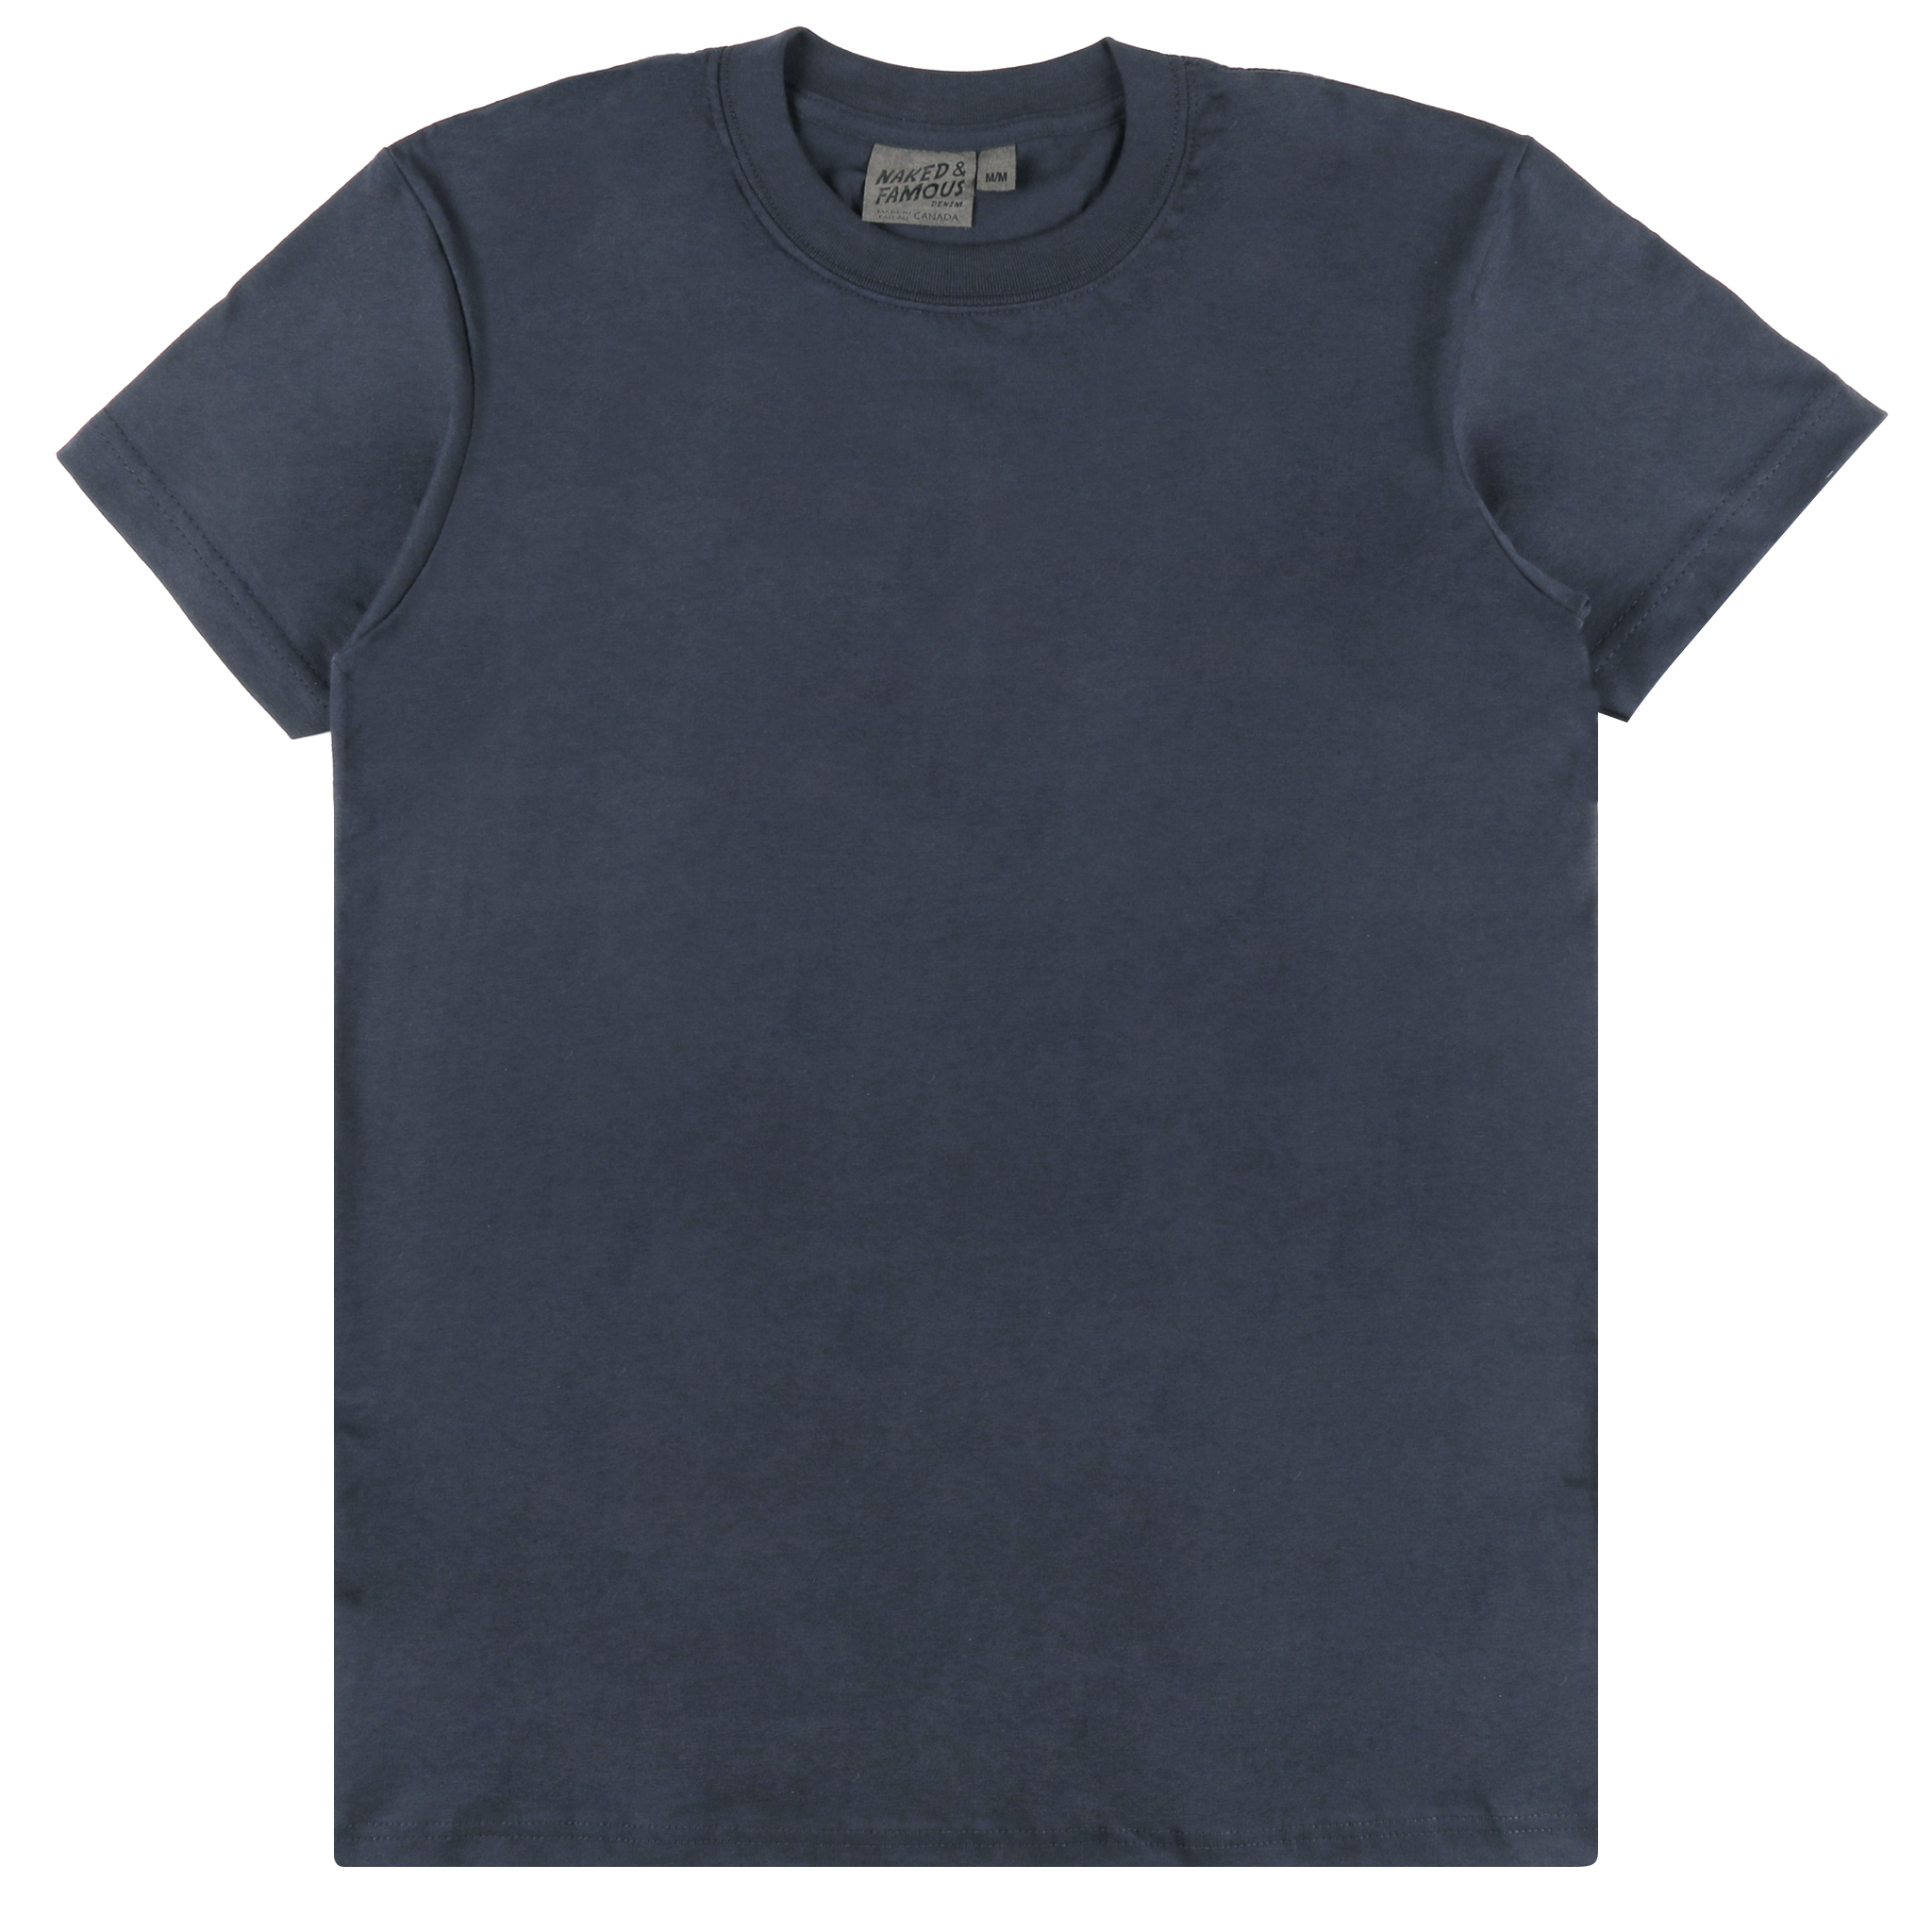  Navy Circular Knit T-Shirt Flat View 